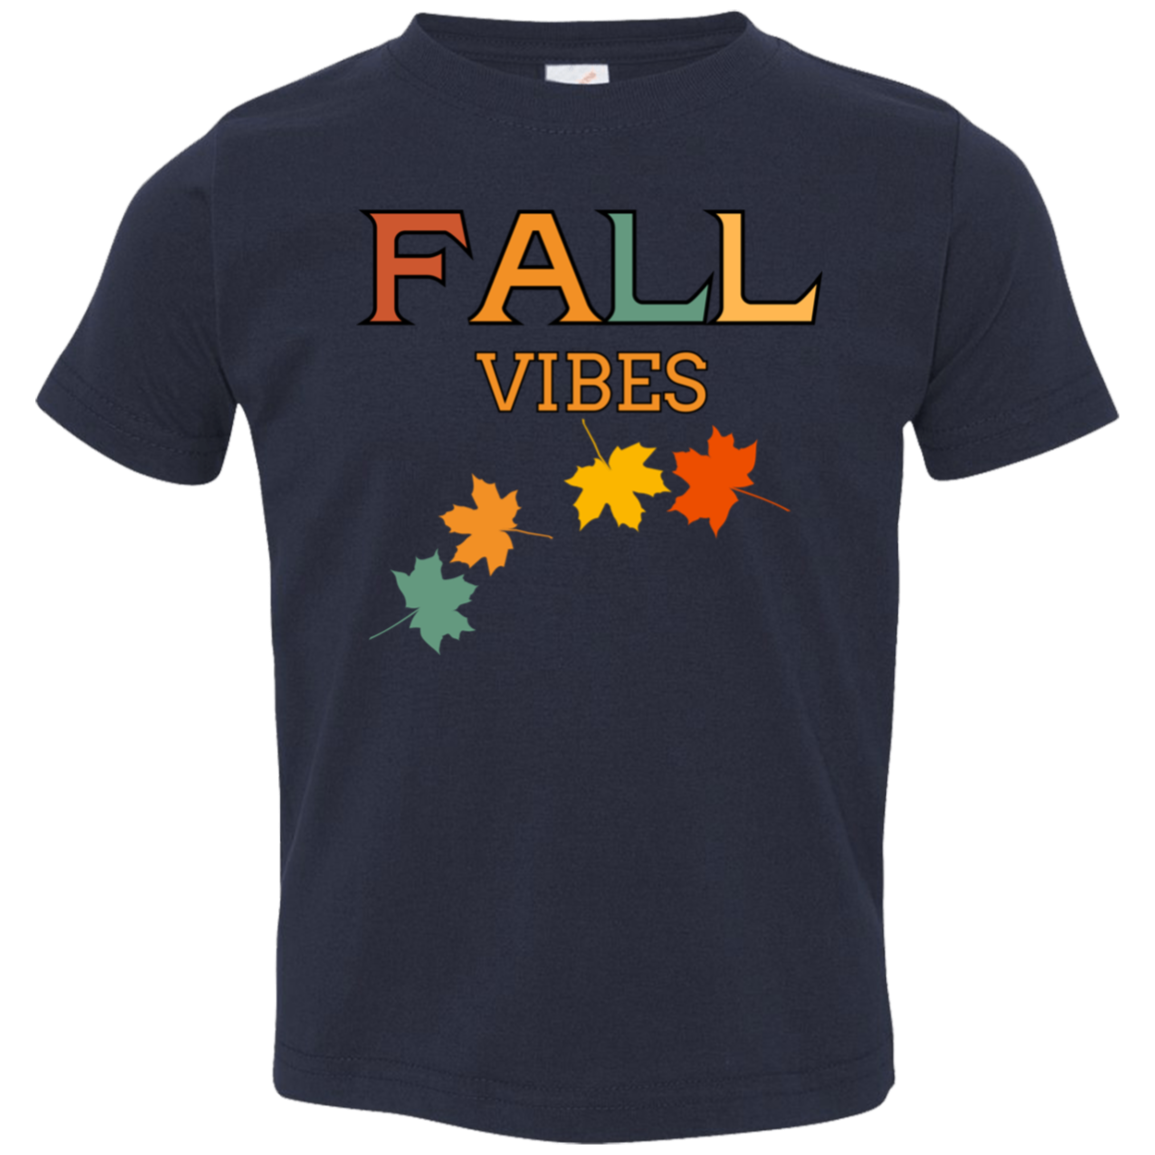 Fall Vibes - Unisex Toddler Jersey T-Shirt